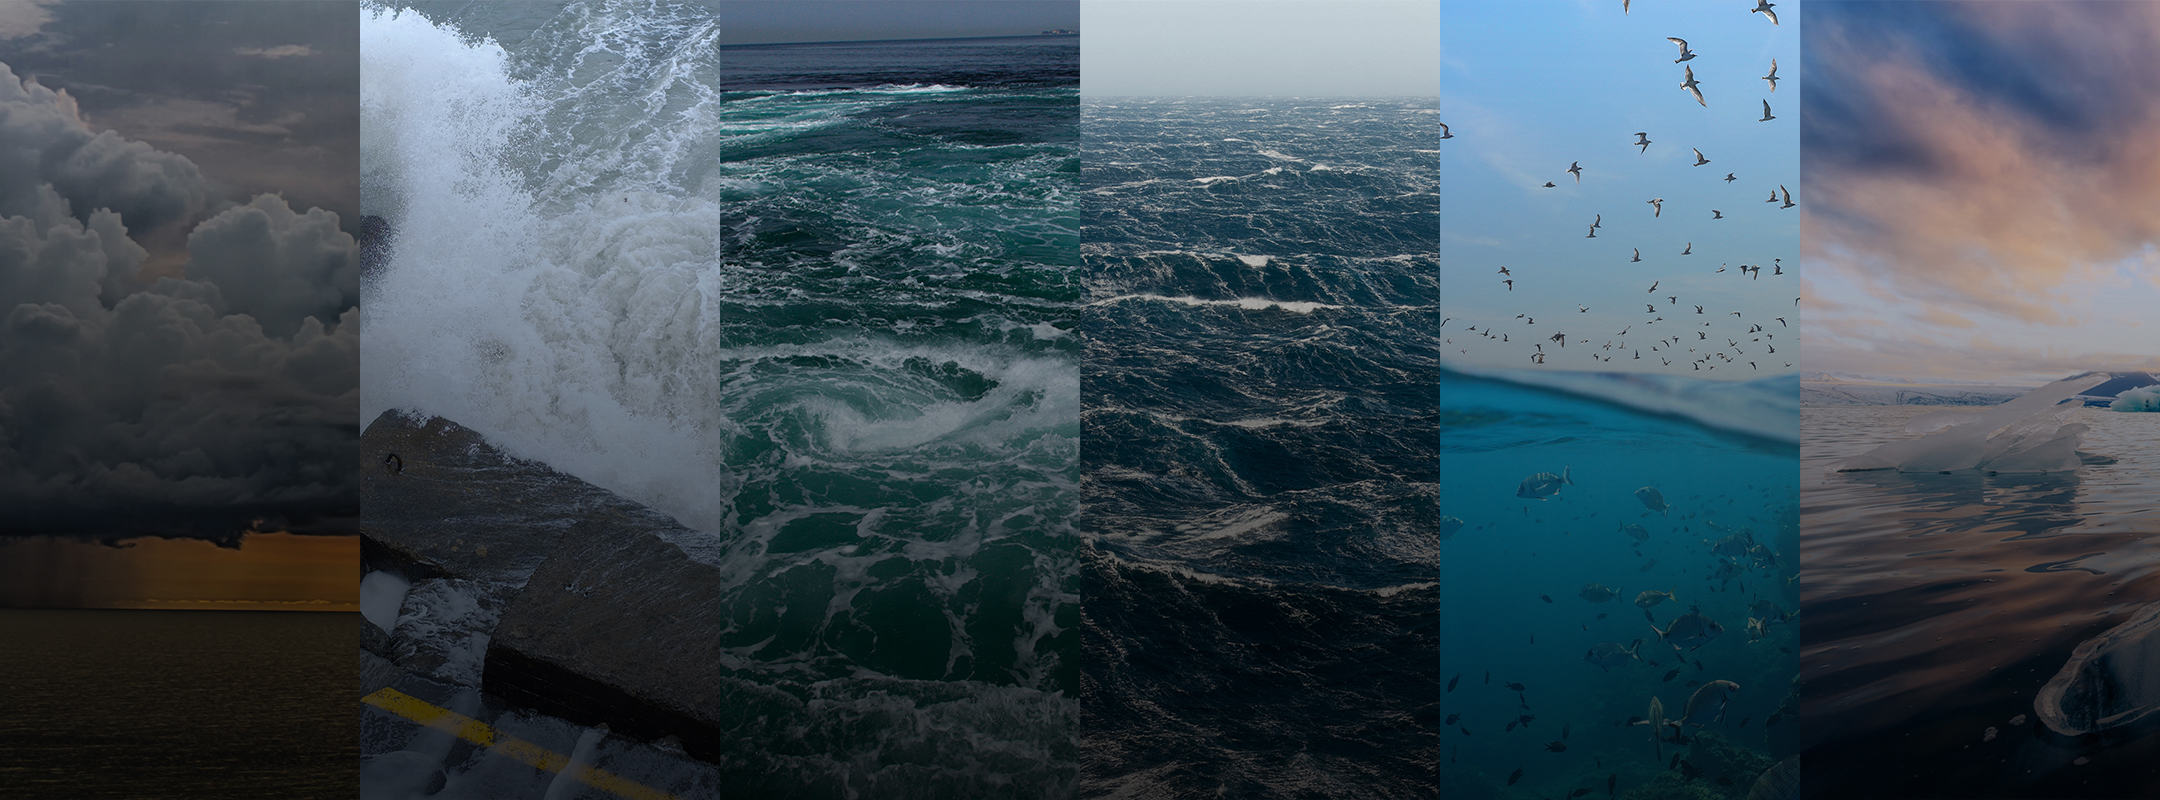 Panels of ocean images